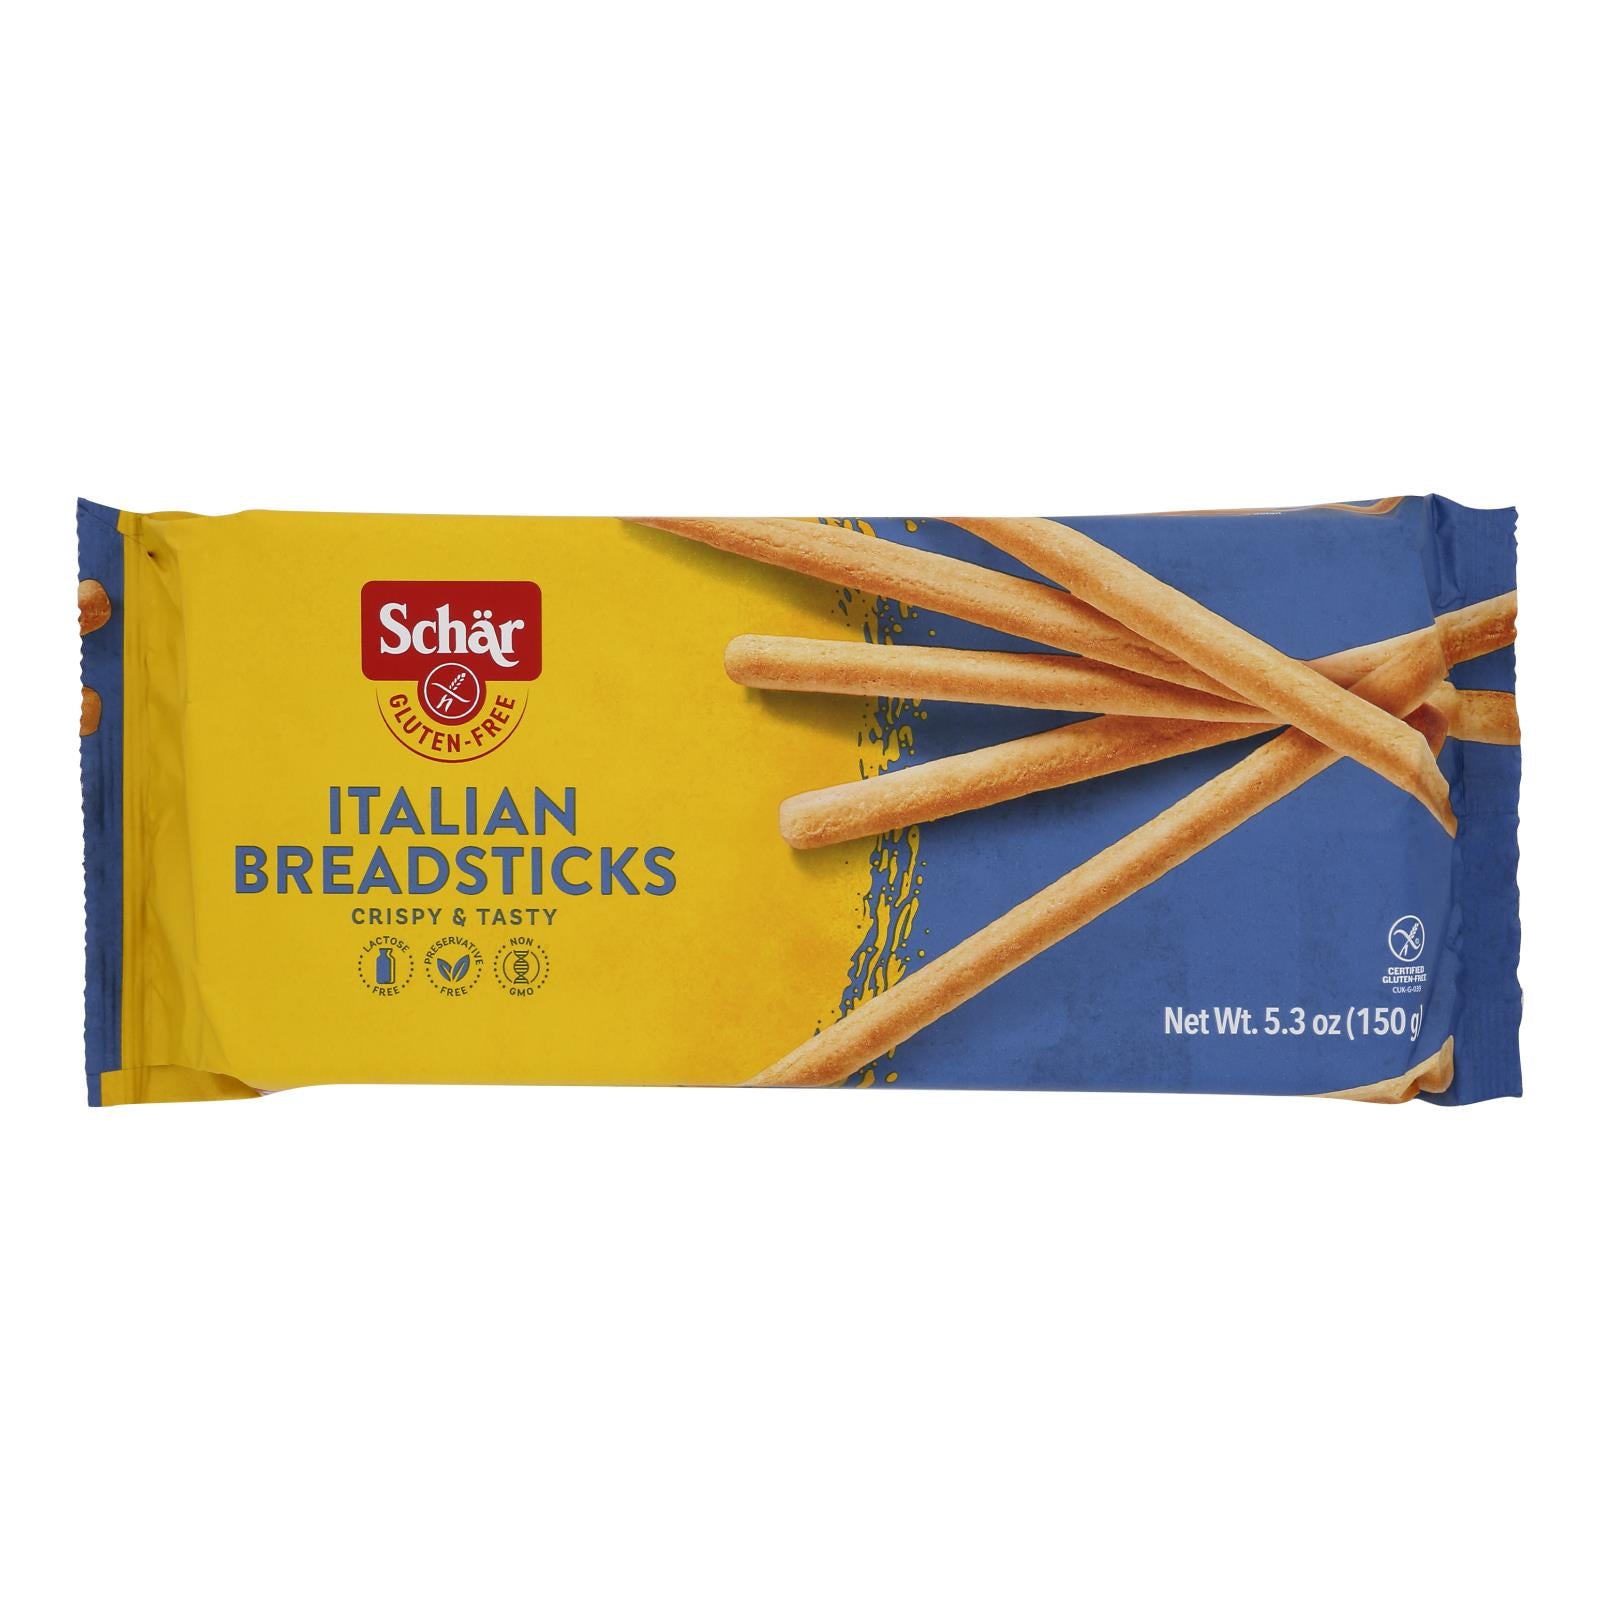 Schar Italian Breadsticks Gluten Free - Case of 10 - 5.3 oz.